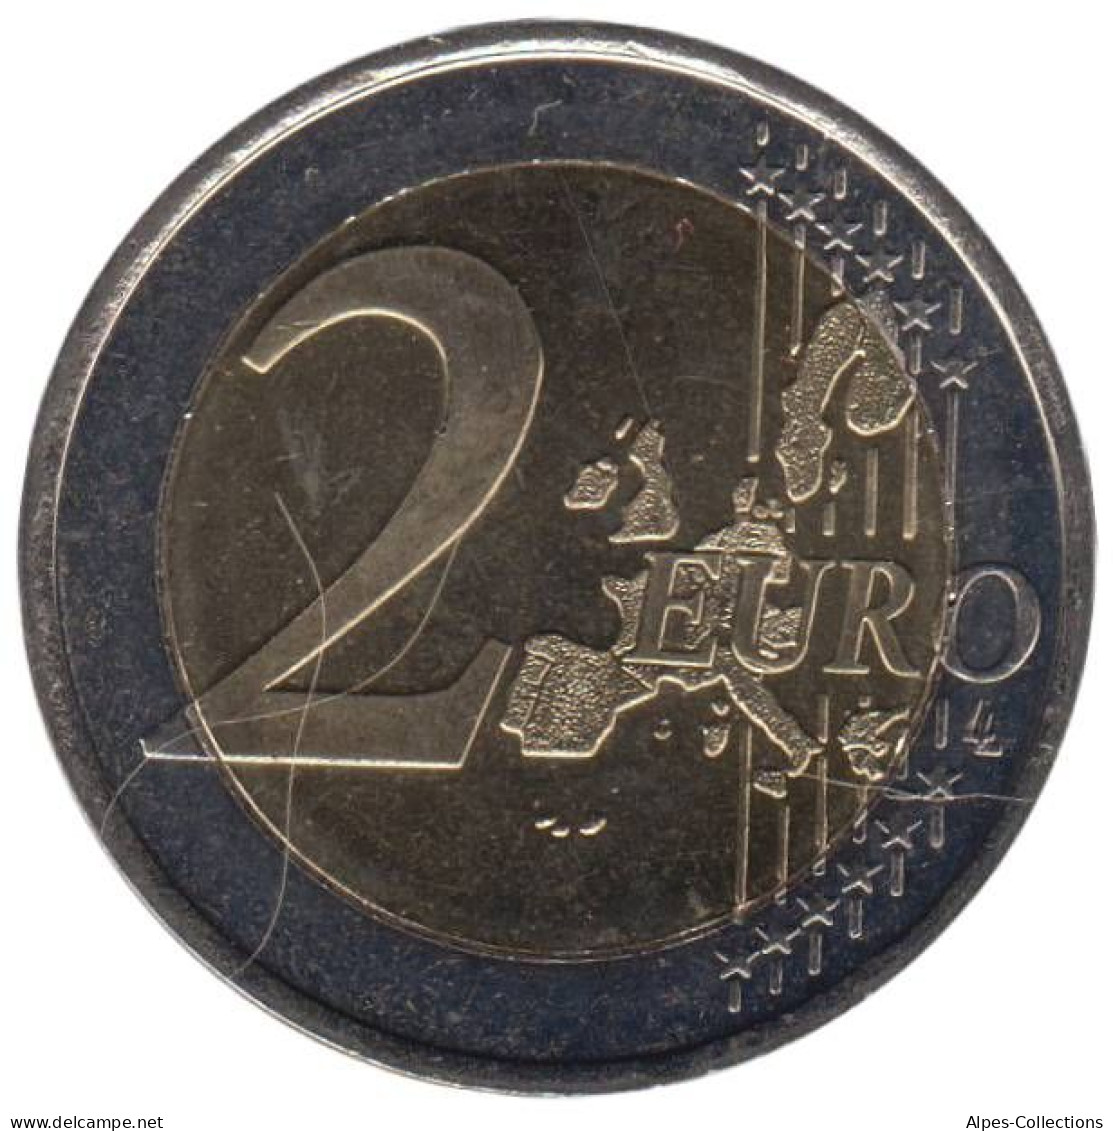 FI20003.1 - FINLANDE - 2 Euros - 2003 - Finlande